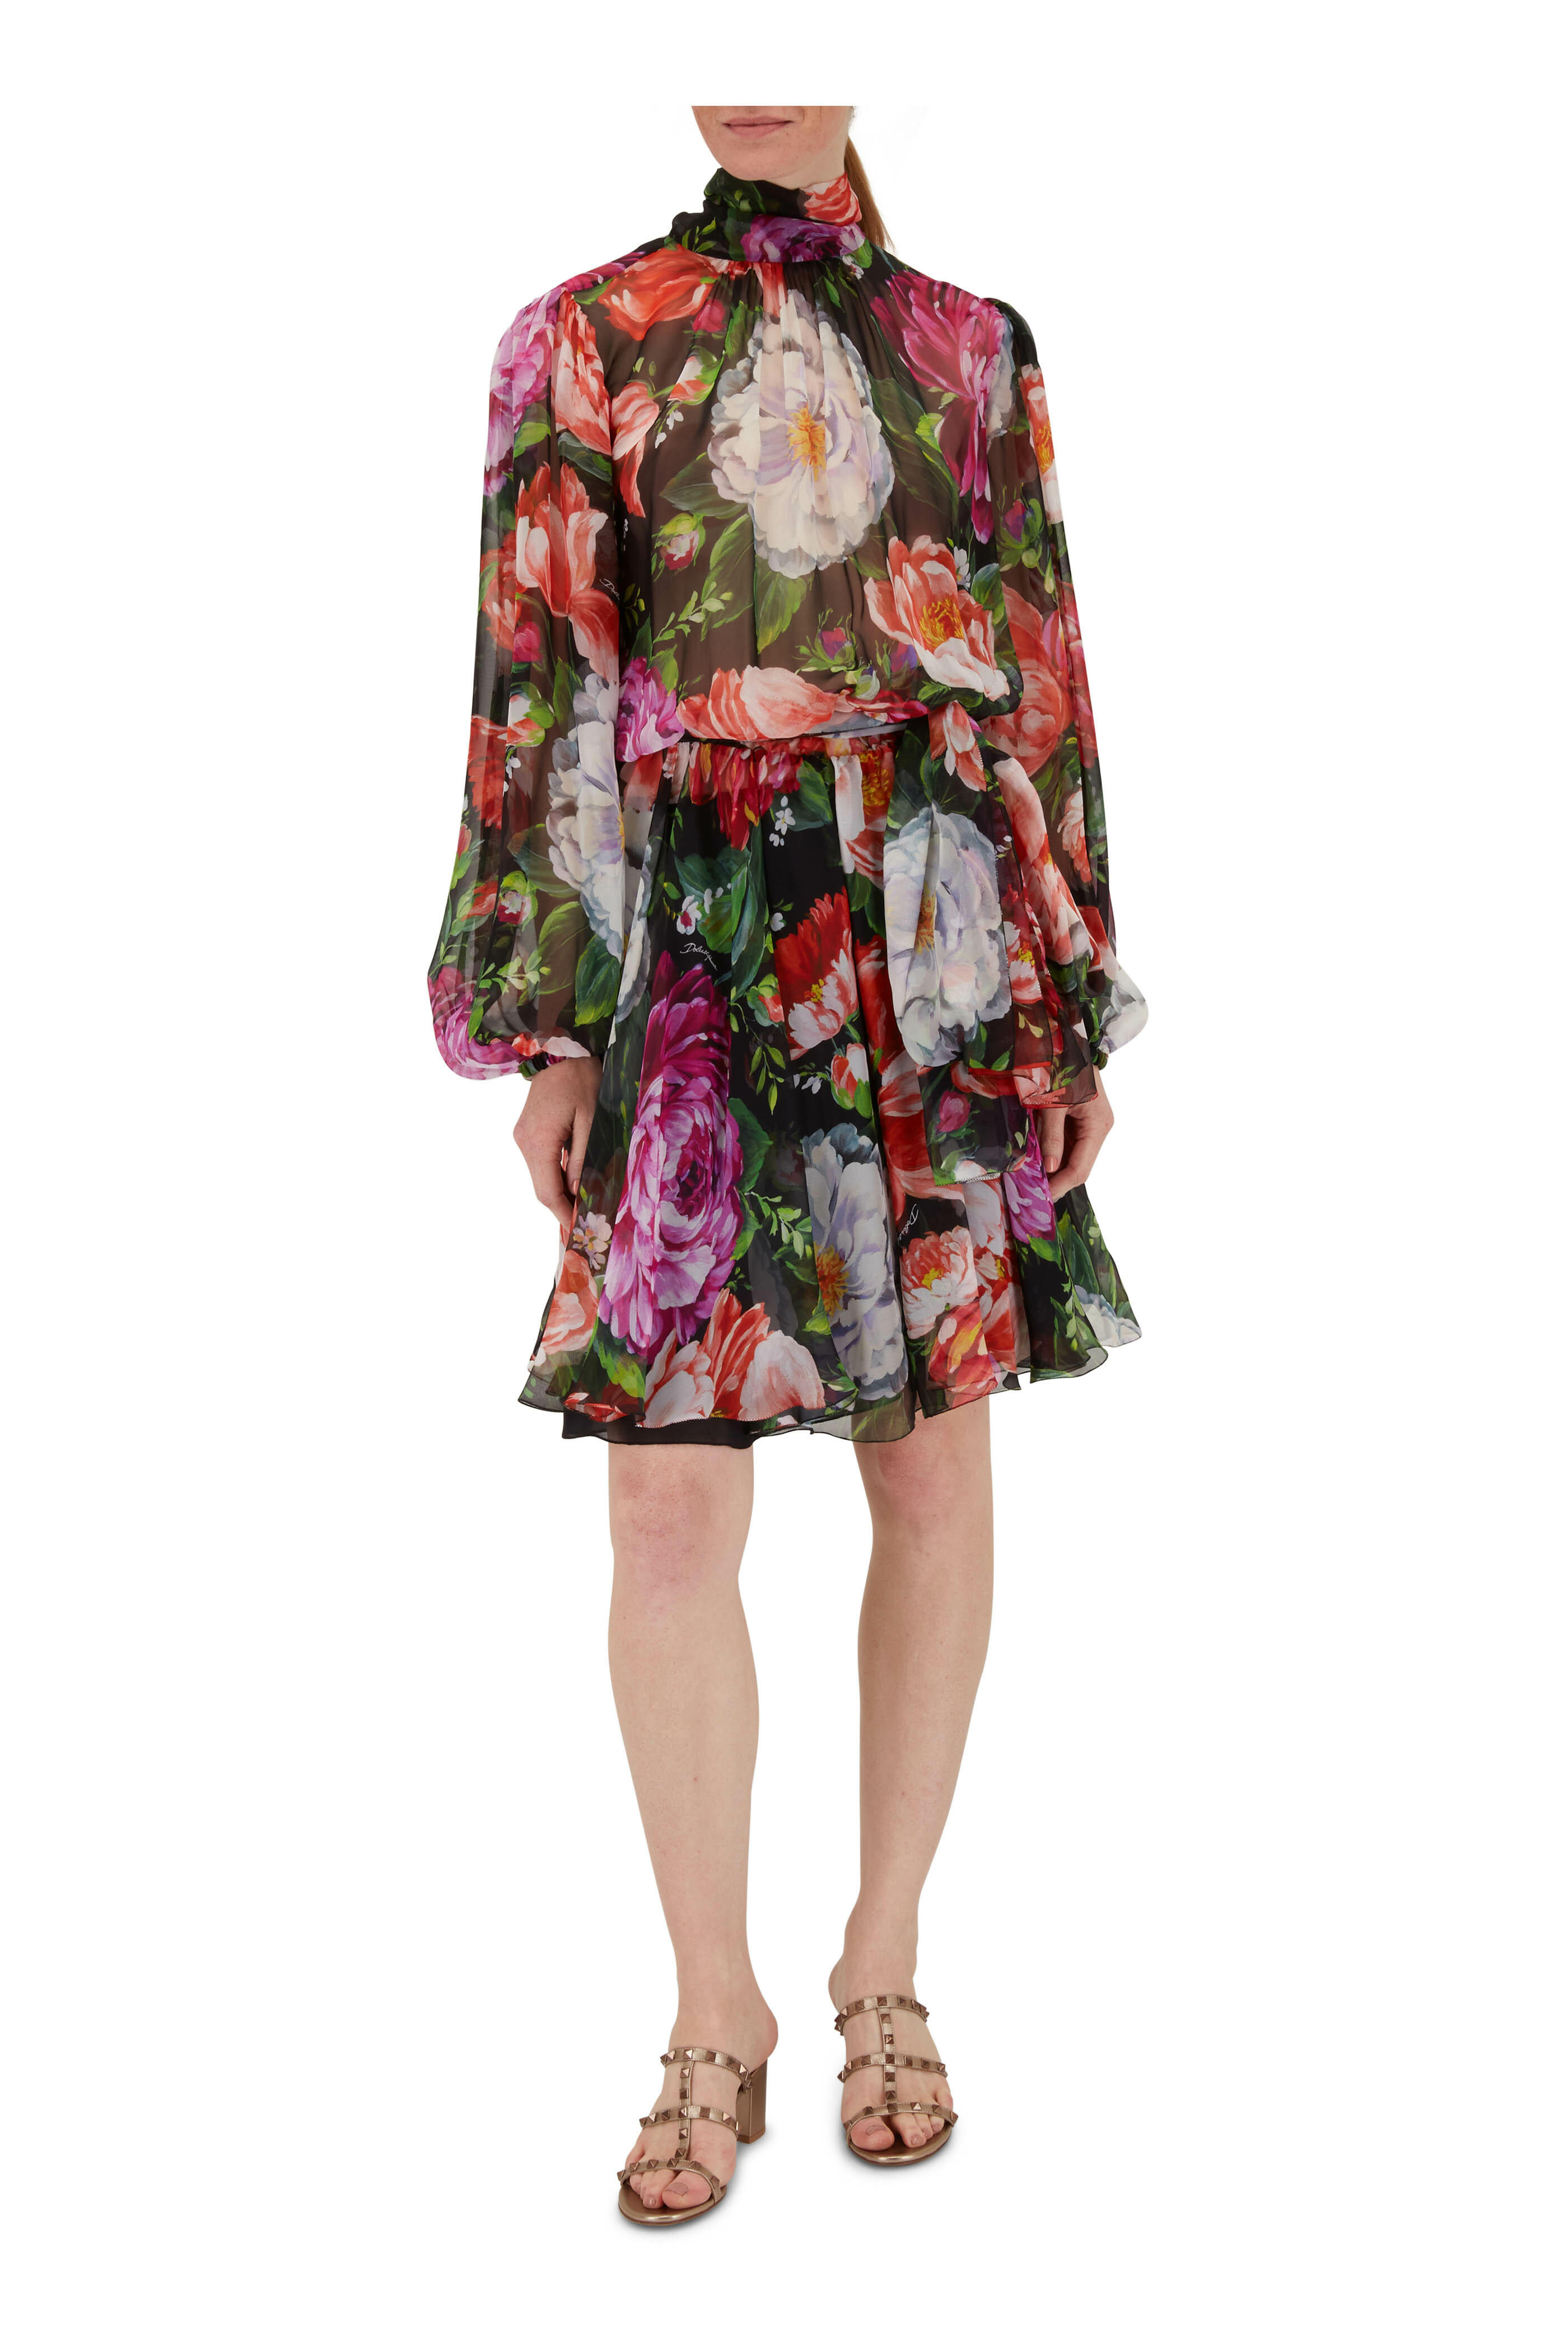 Dolce & Gabbana Multicolor Floral Silk Chiffon Dress